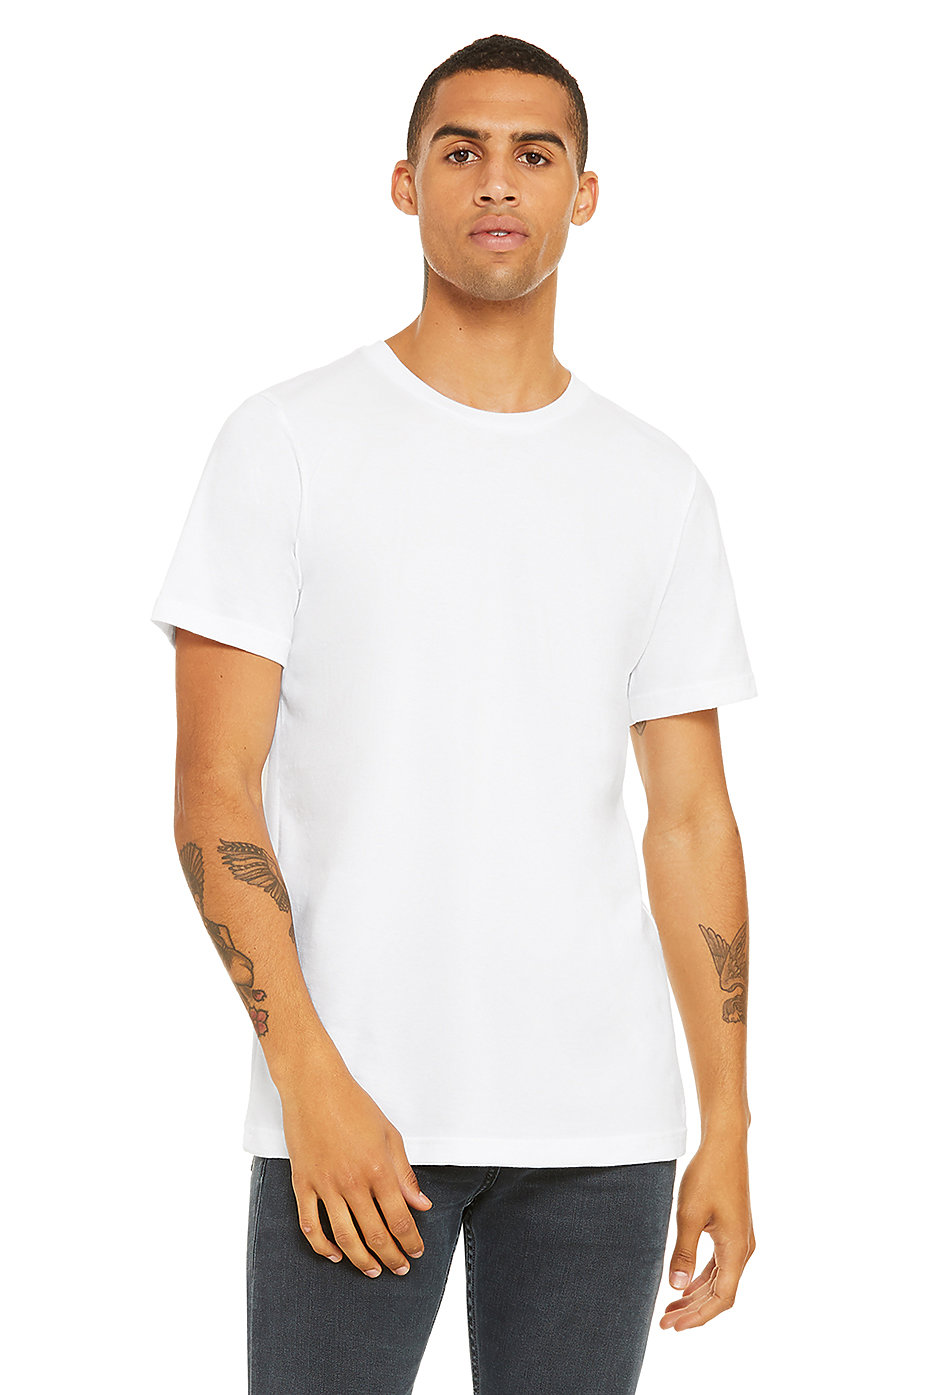 Adult Unisex T-Shirt Mountain Jay Bella Canvas 3001 Jersey Short Sleeve Tee Vector Graphic